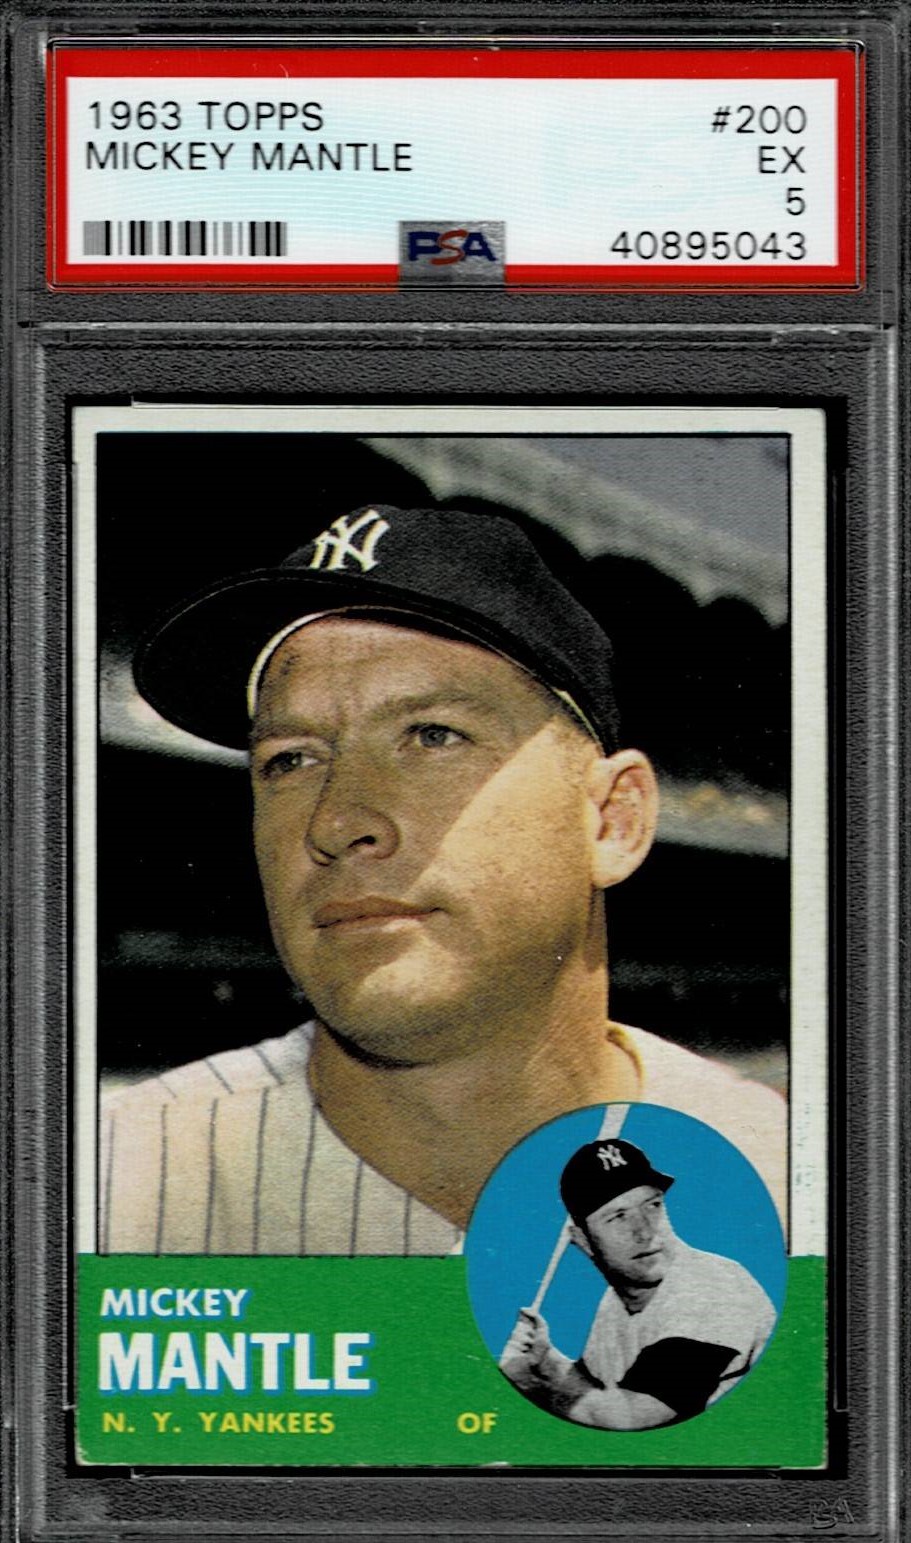 Collecting the 1963 Topps Baseball Card Set - Baseball Card AdvisorBaseball Card Adviser